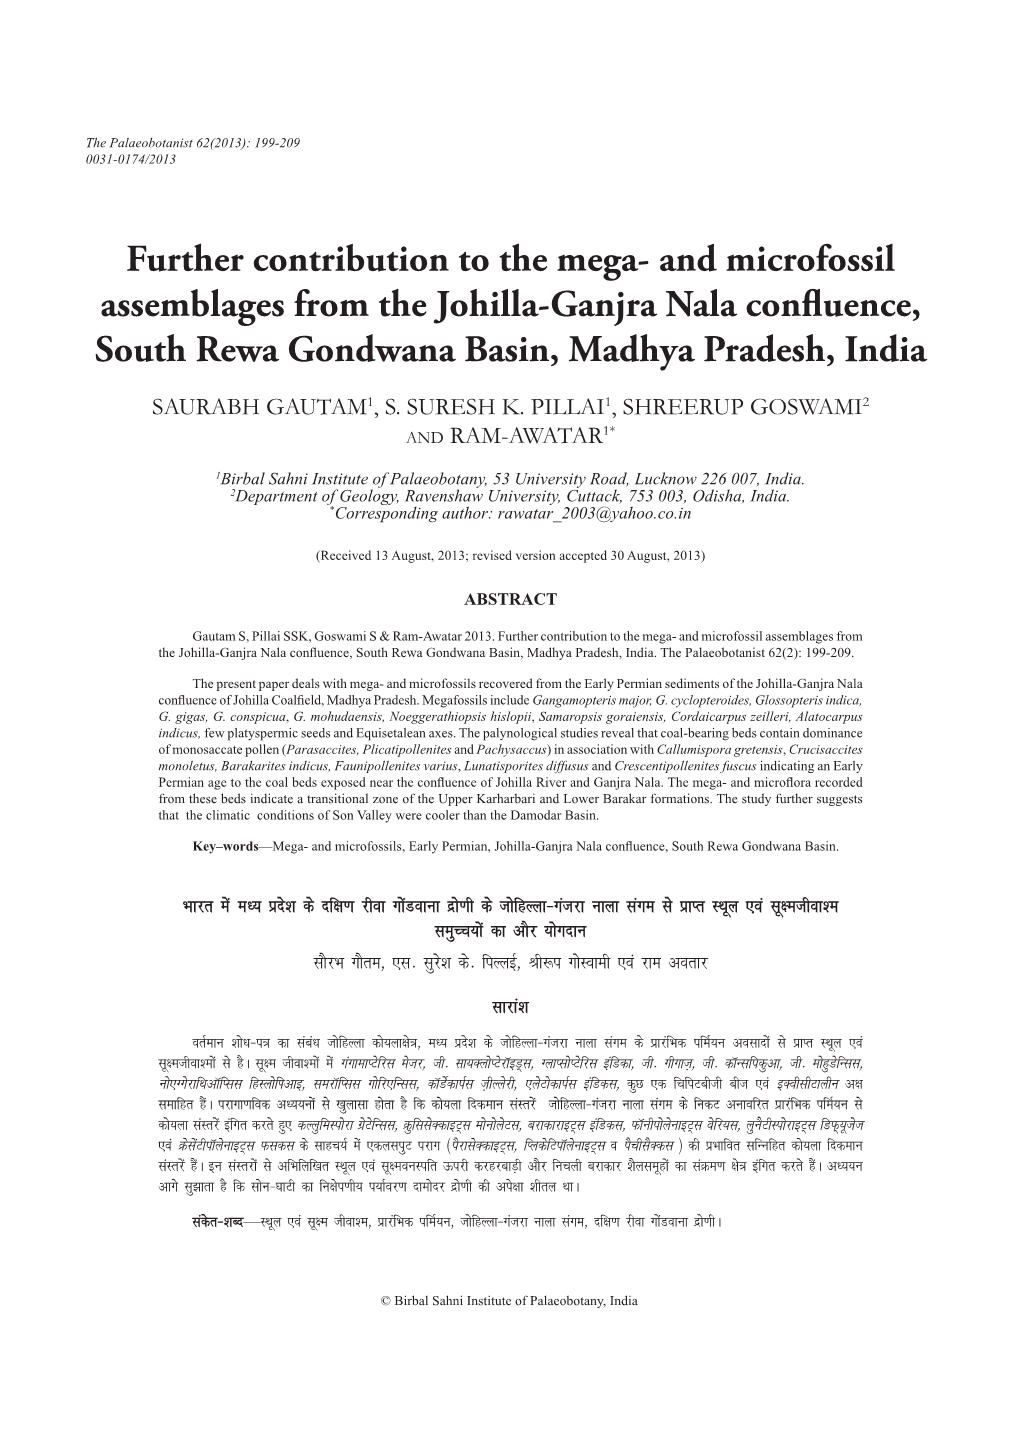 Further Contribution to the Mega- and Microfossil Assemblages from the Johilla-Ganjra Nala Confluence, South Rewa Gondwana Basin, Madhya Pradesh, India